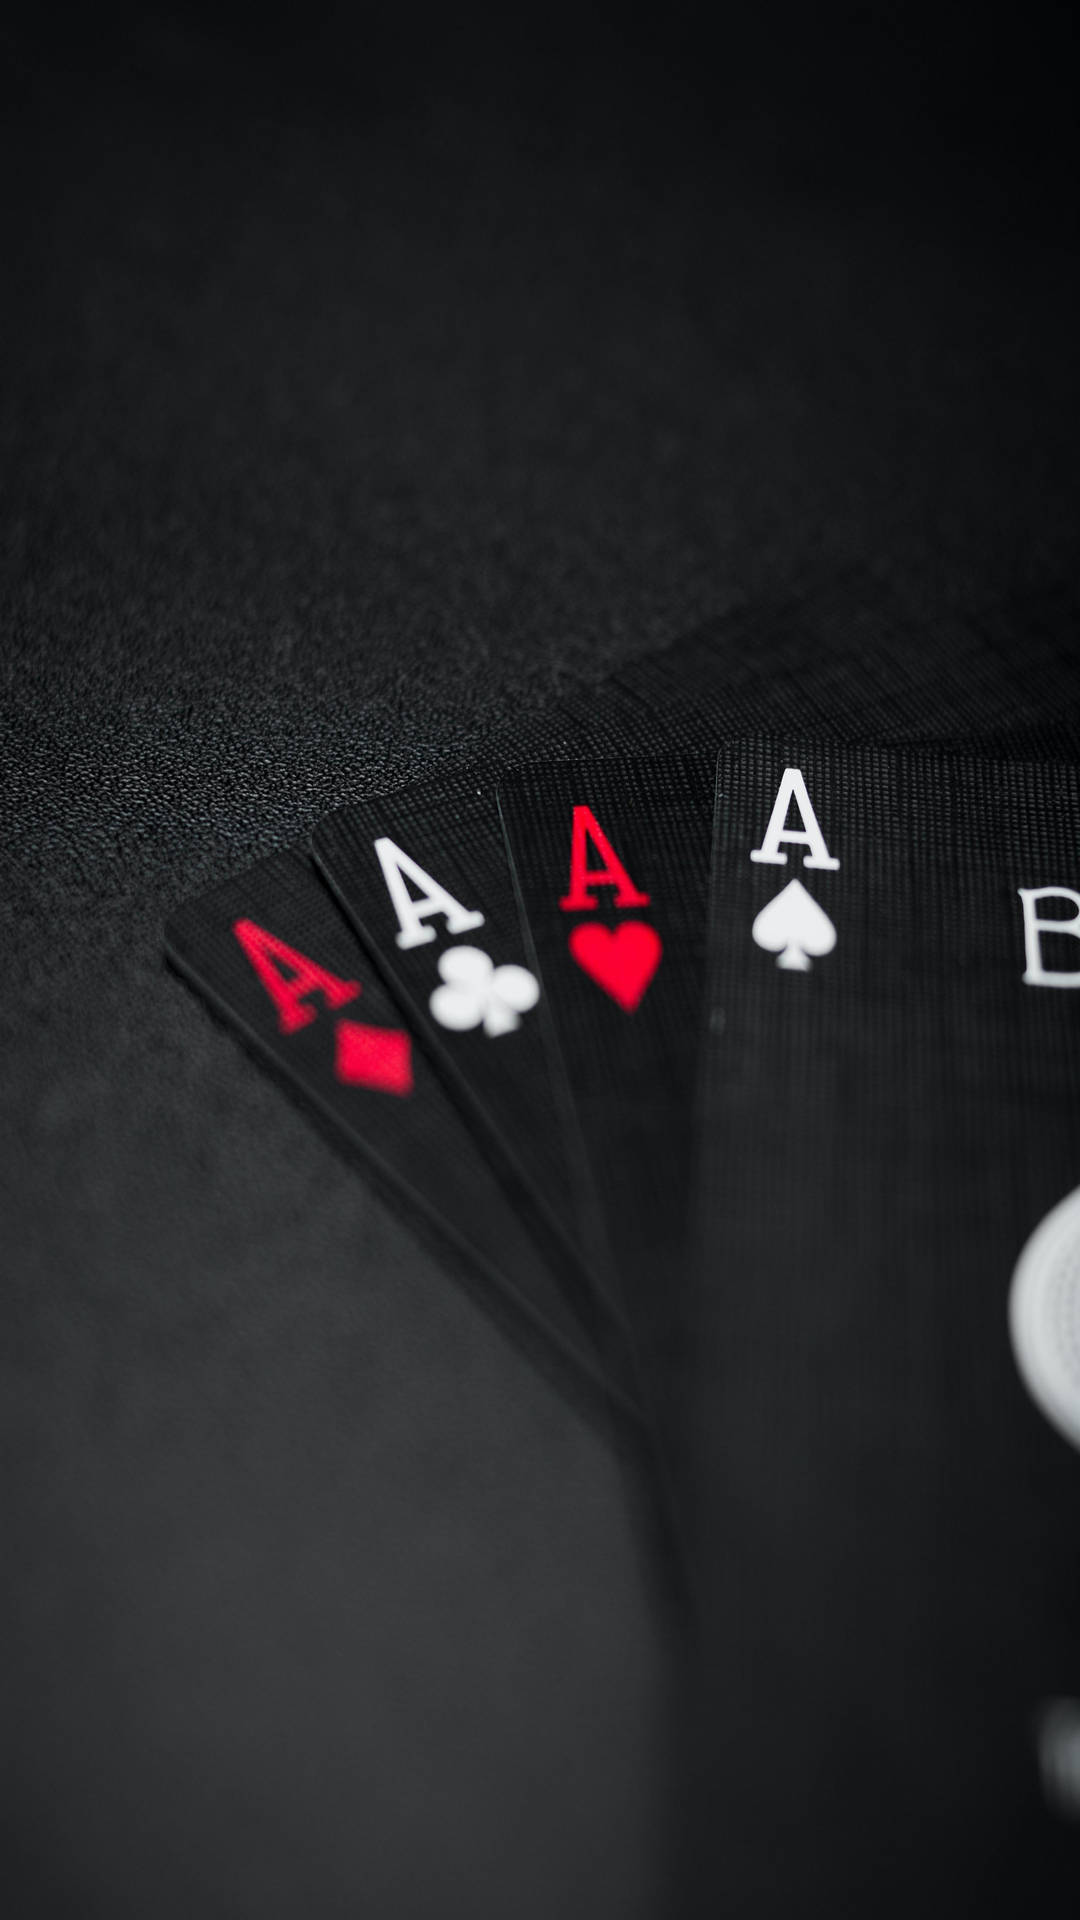 Black Ace Cards Full Hd Phone Wallpaper